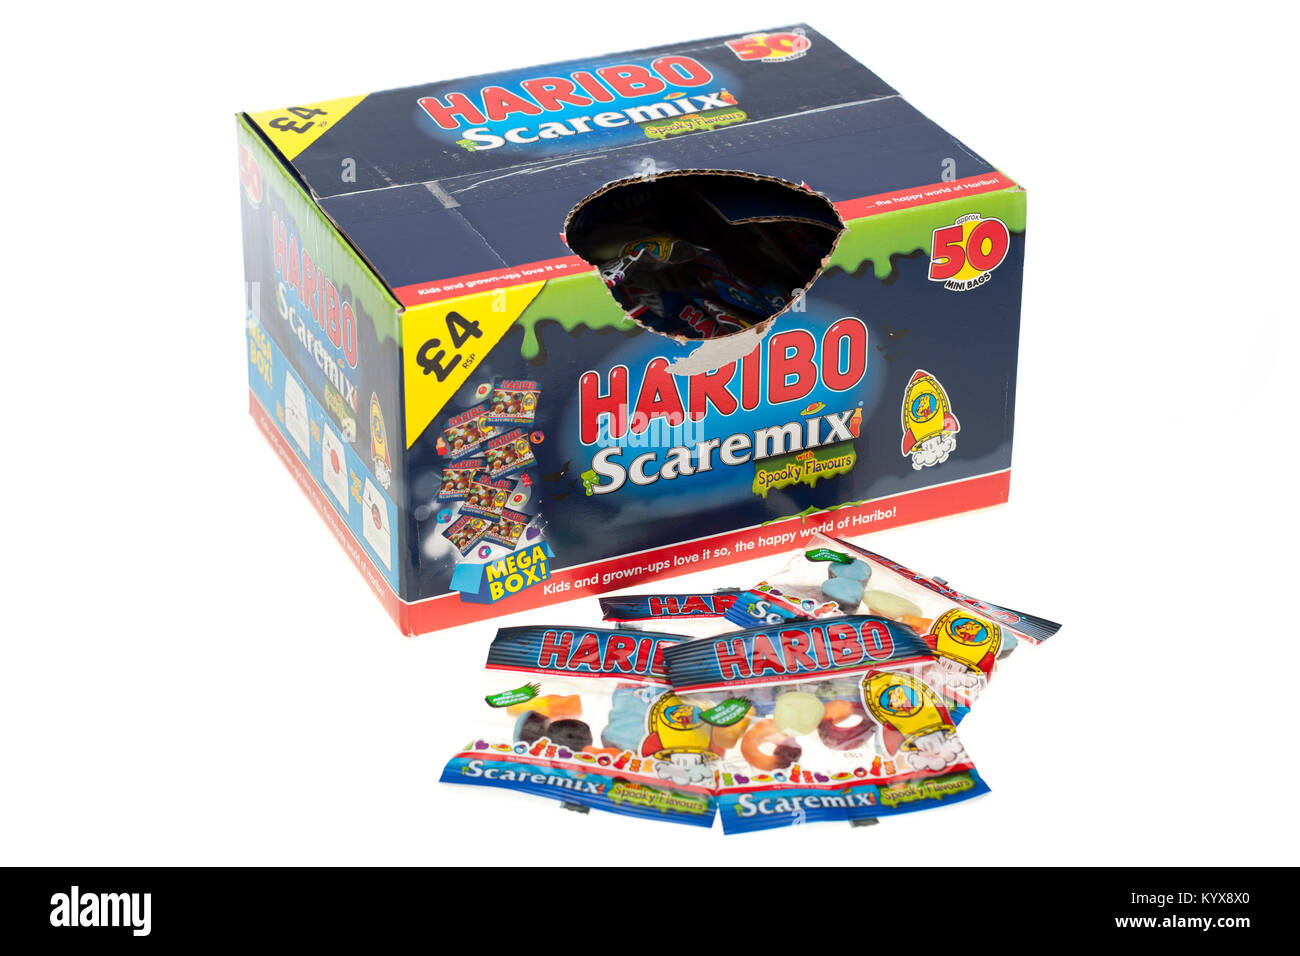 Haribo scaremix Halloween sweets Stock Photo